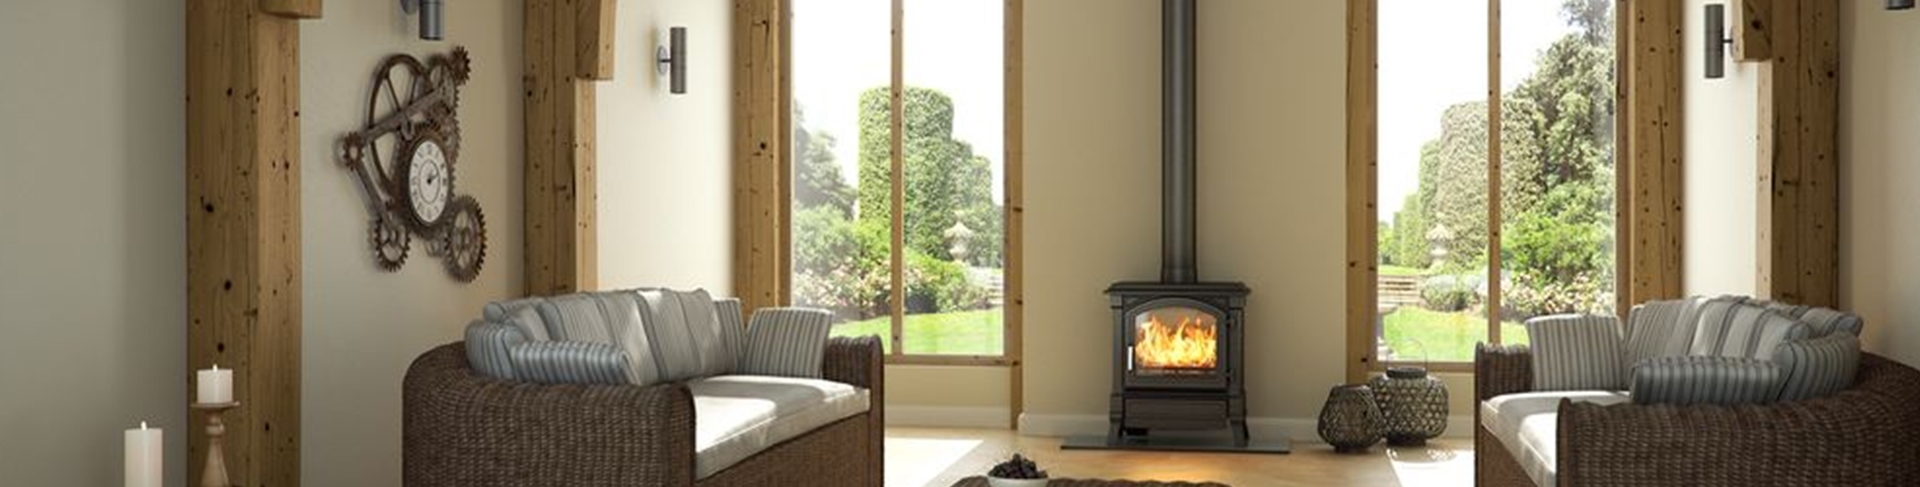 Wood Burner Fireplace Ideas Unique the London Fireplaces